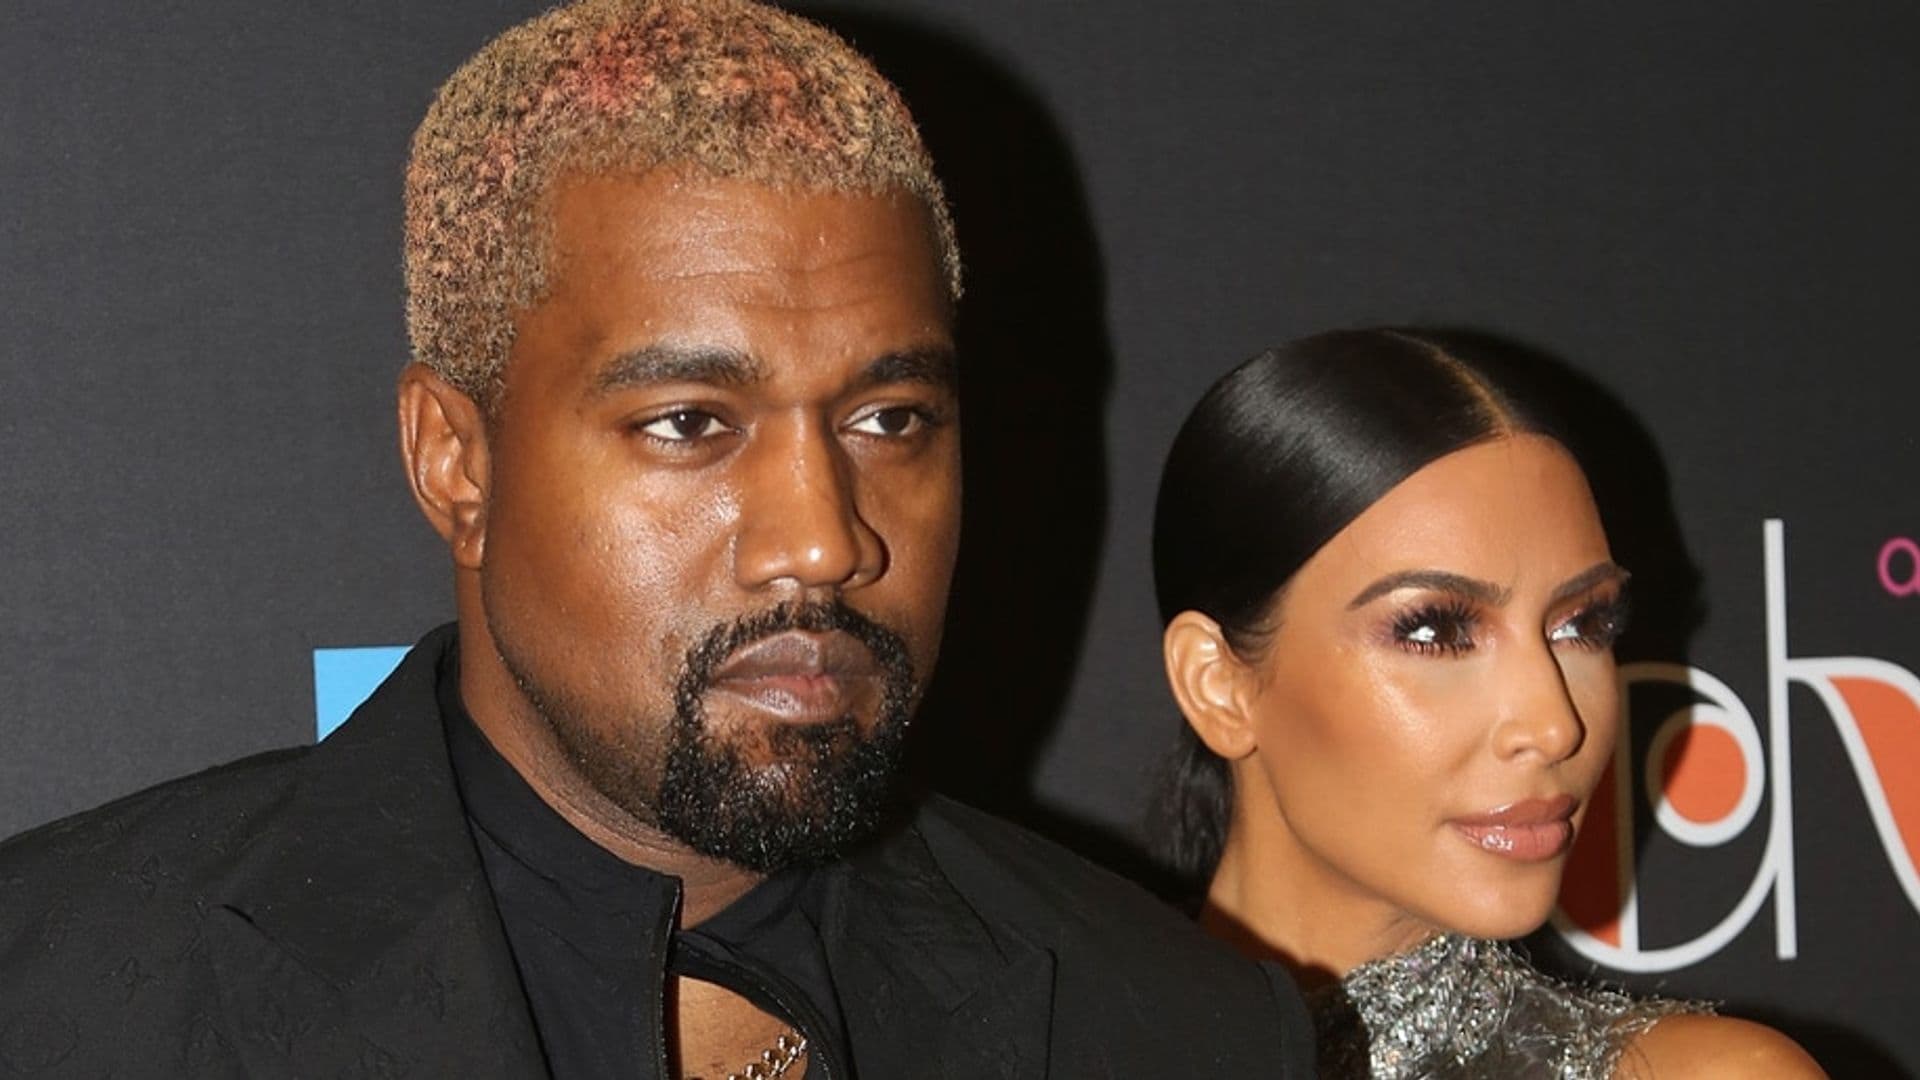 Why did Kanye take back the $14 million gift he gave to Kim?